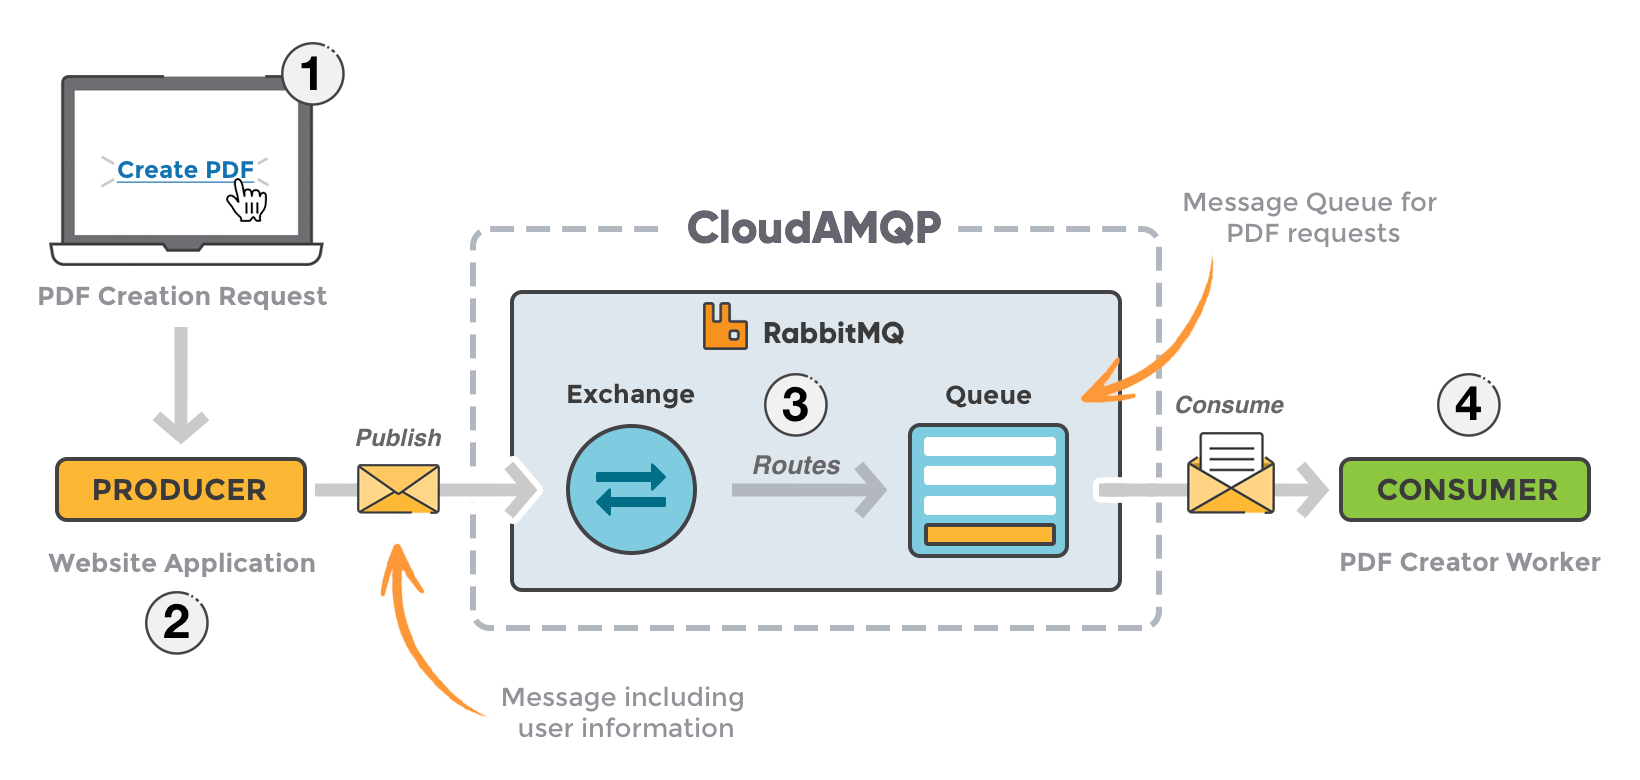 RabbitMQ Exchanges: cloudAMQP